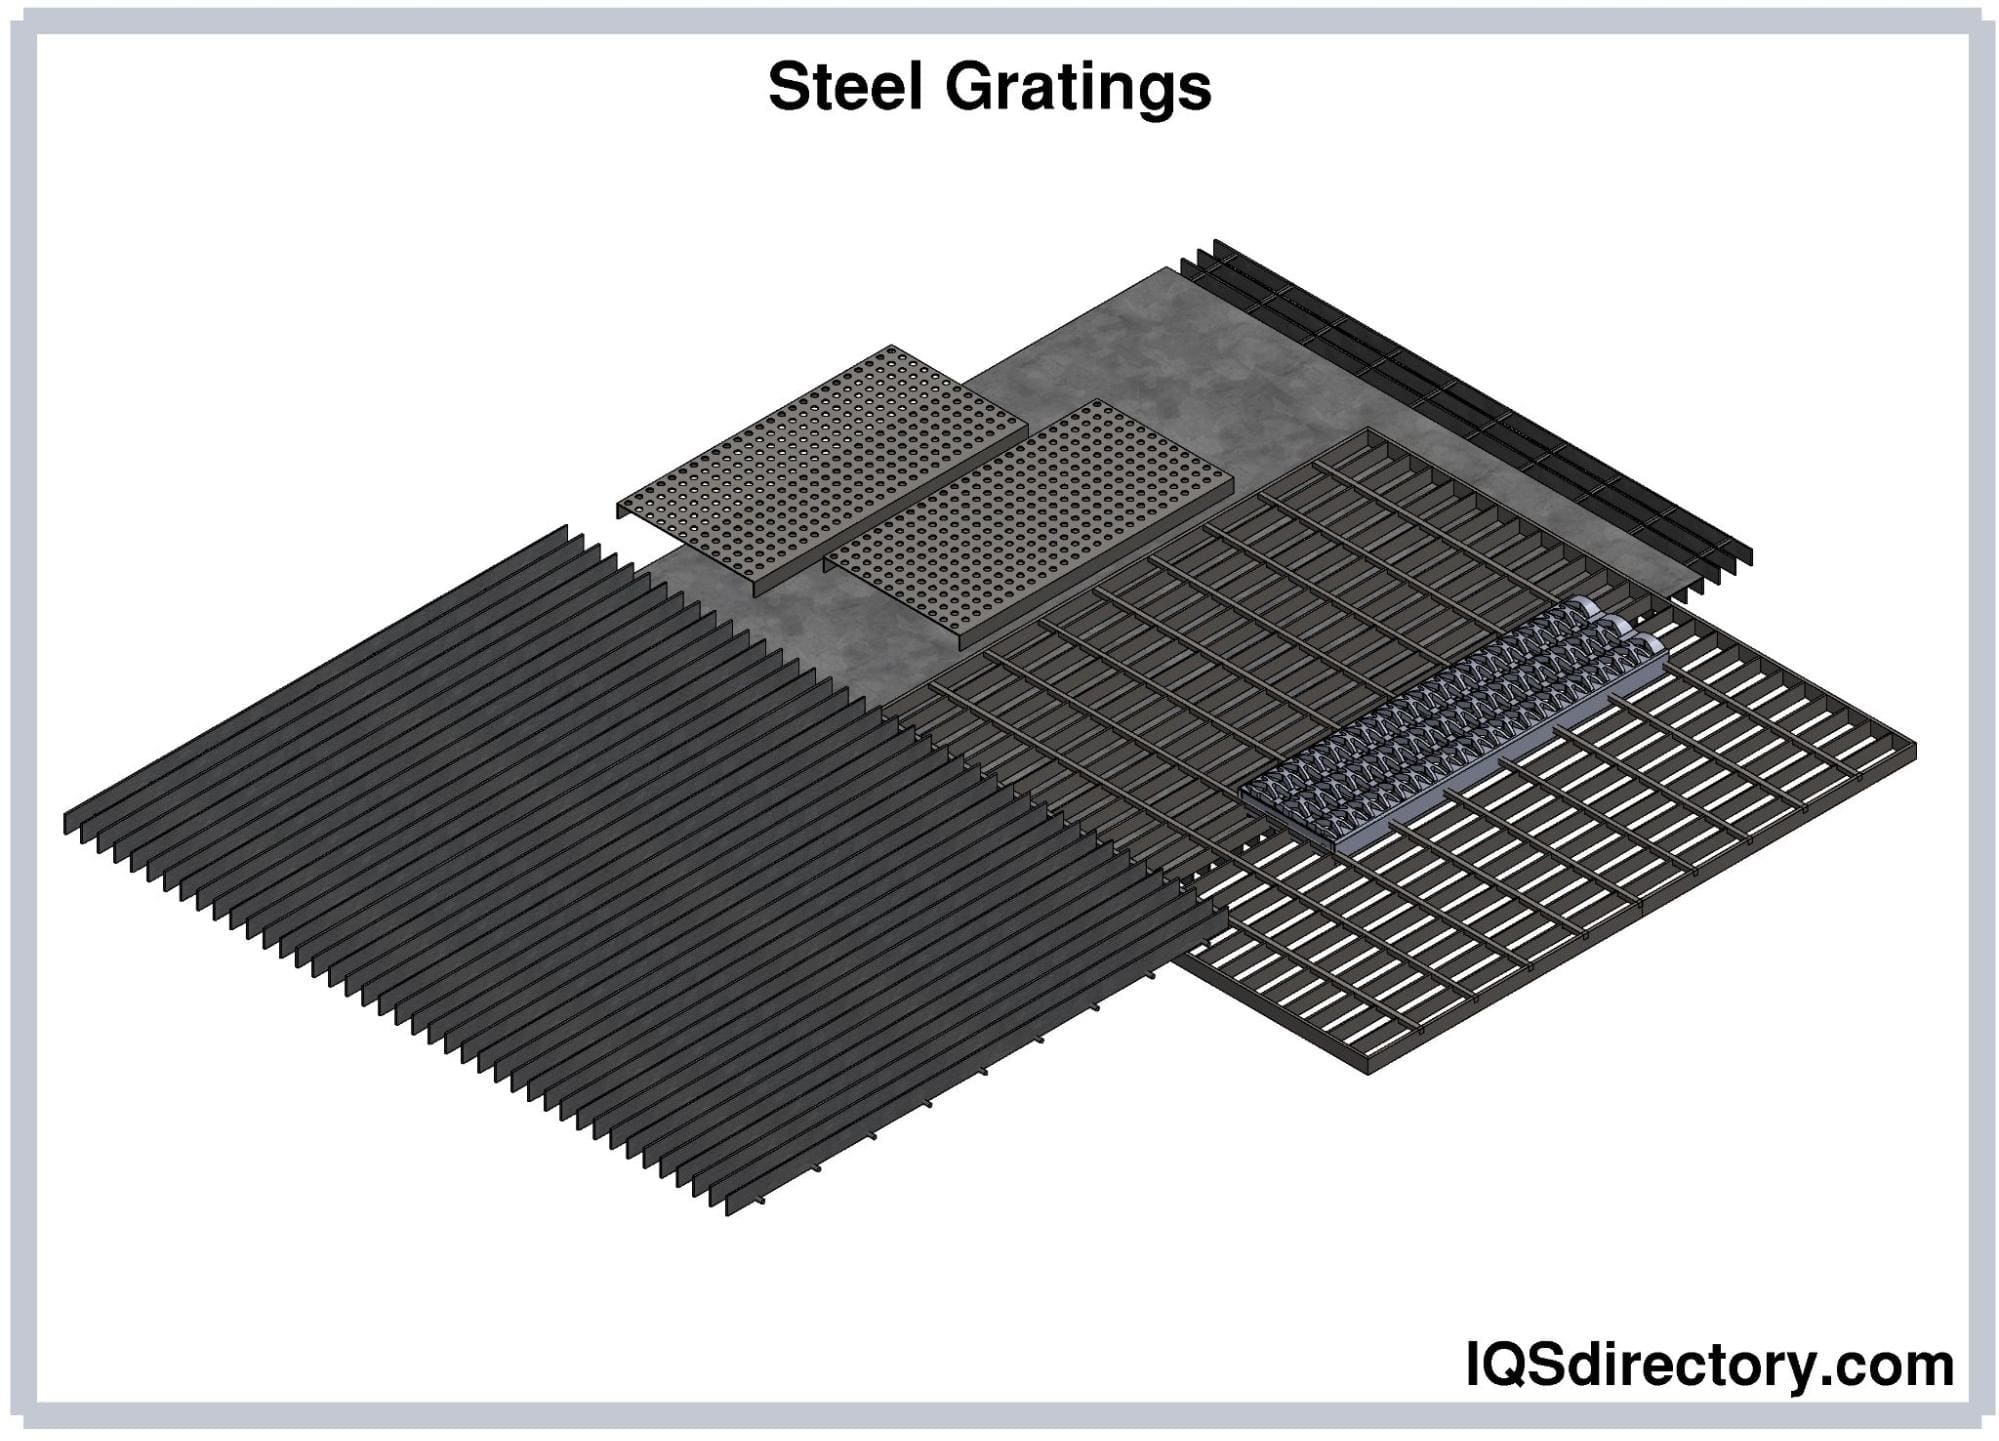 Global Walkway offer an extensive range of Open Steel 'Forge